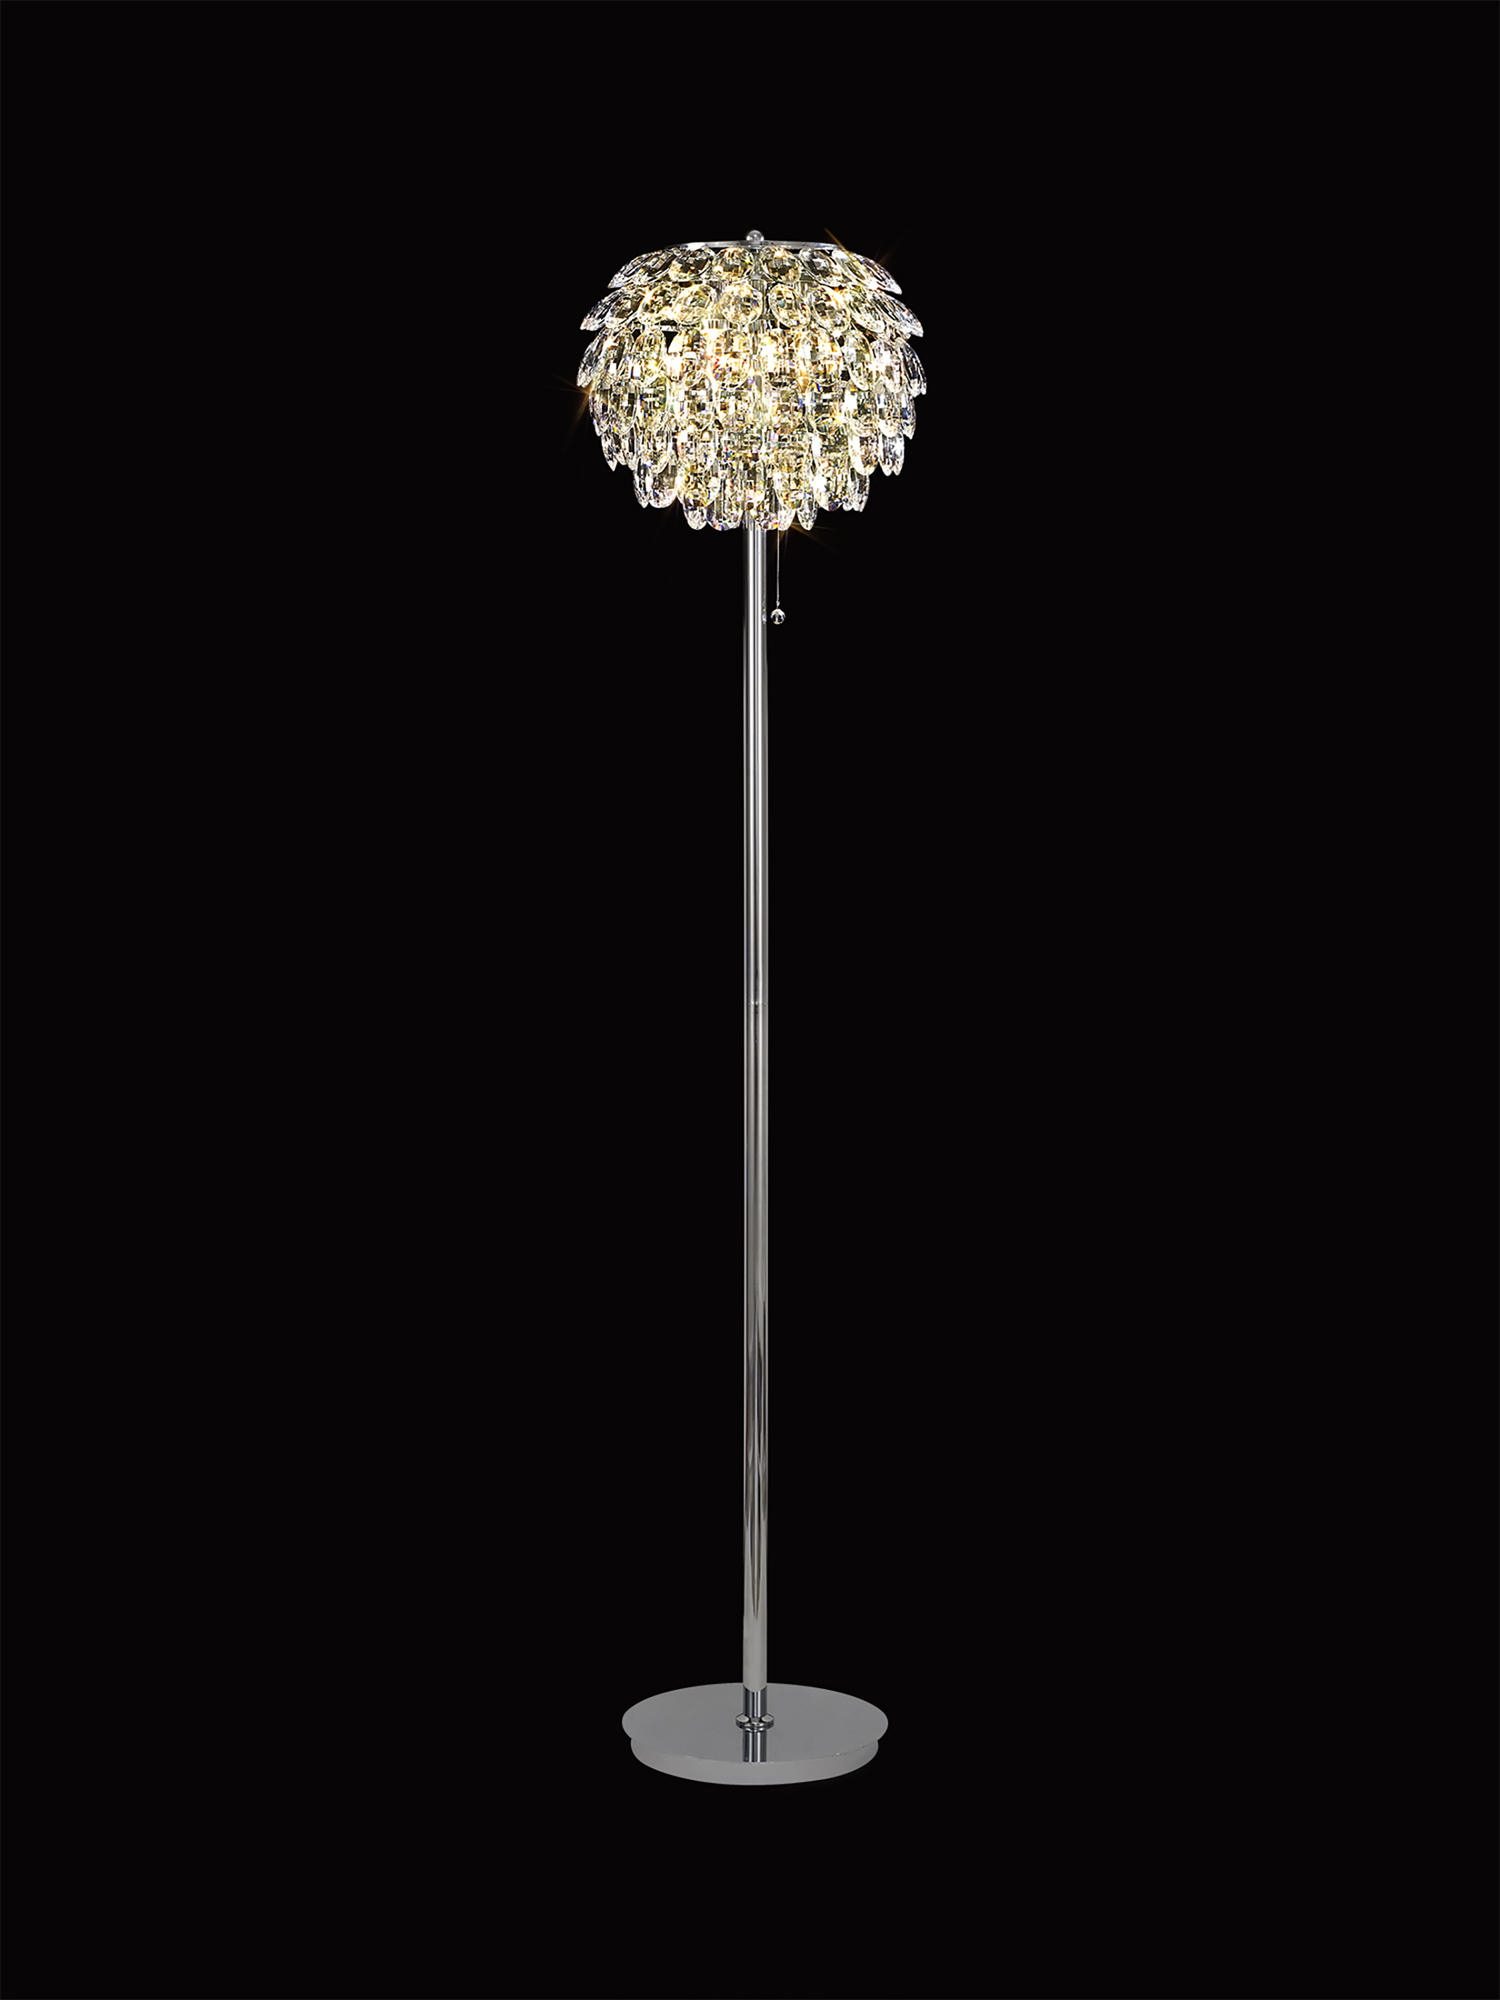 Coniston Polished Chrome Crystal Floor Lamps Diyas Designer Floor Lamps 